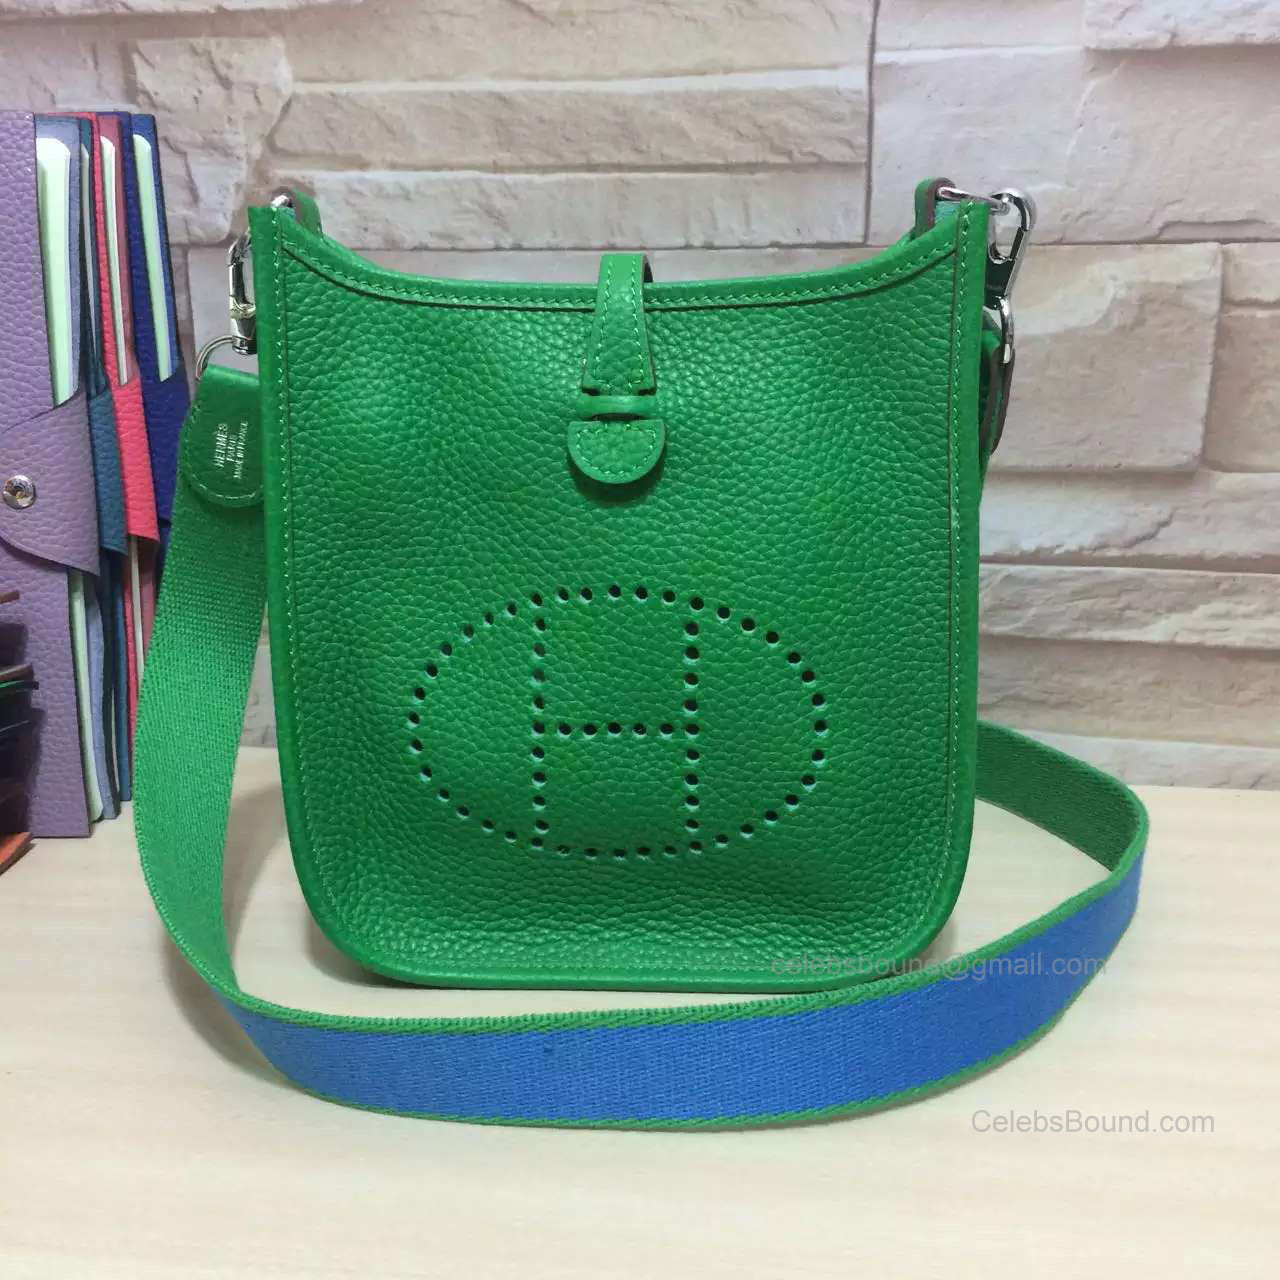 Hermes Evelyne III Bag in Green Togo Leather TPM